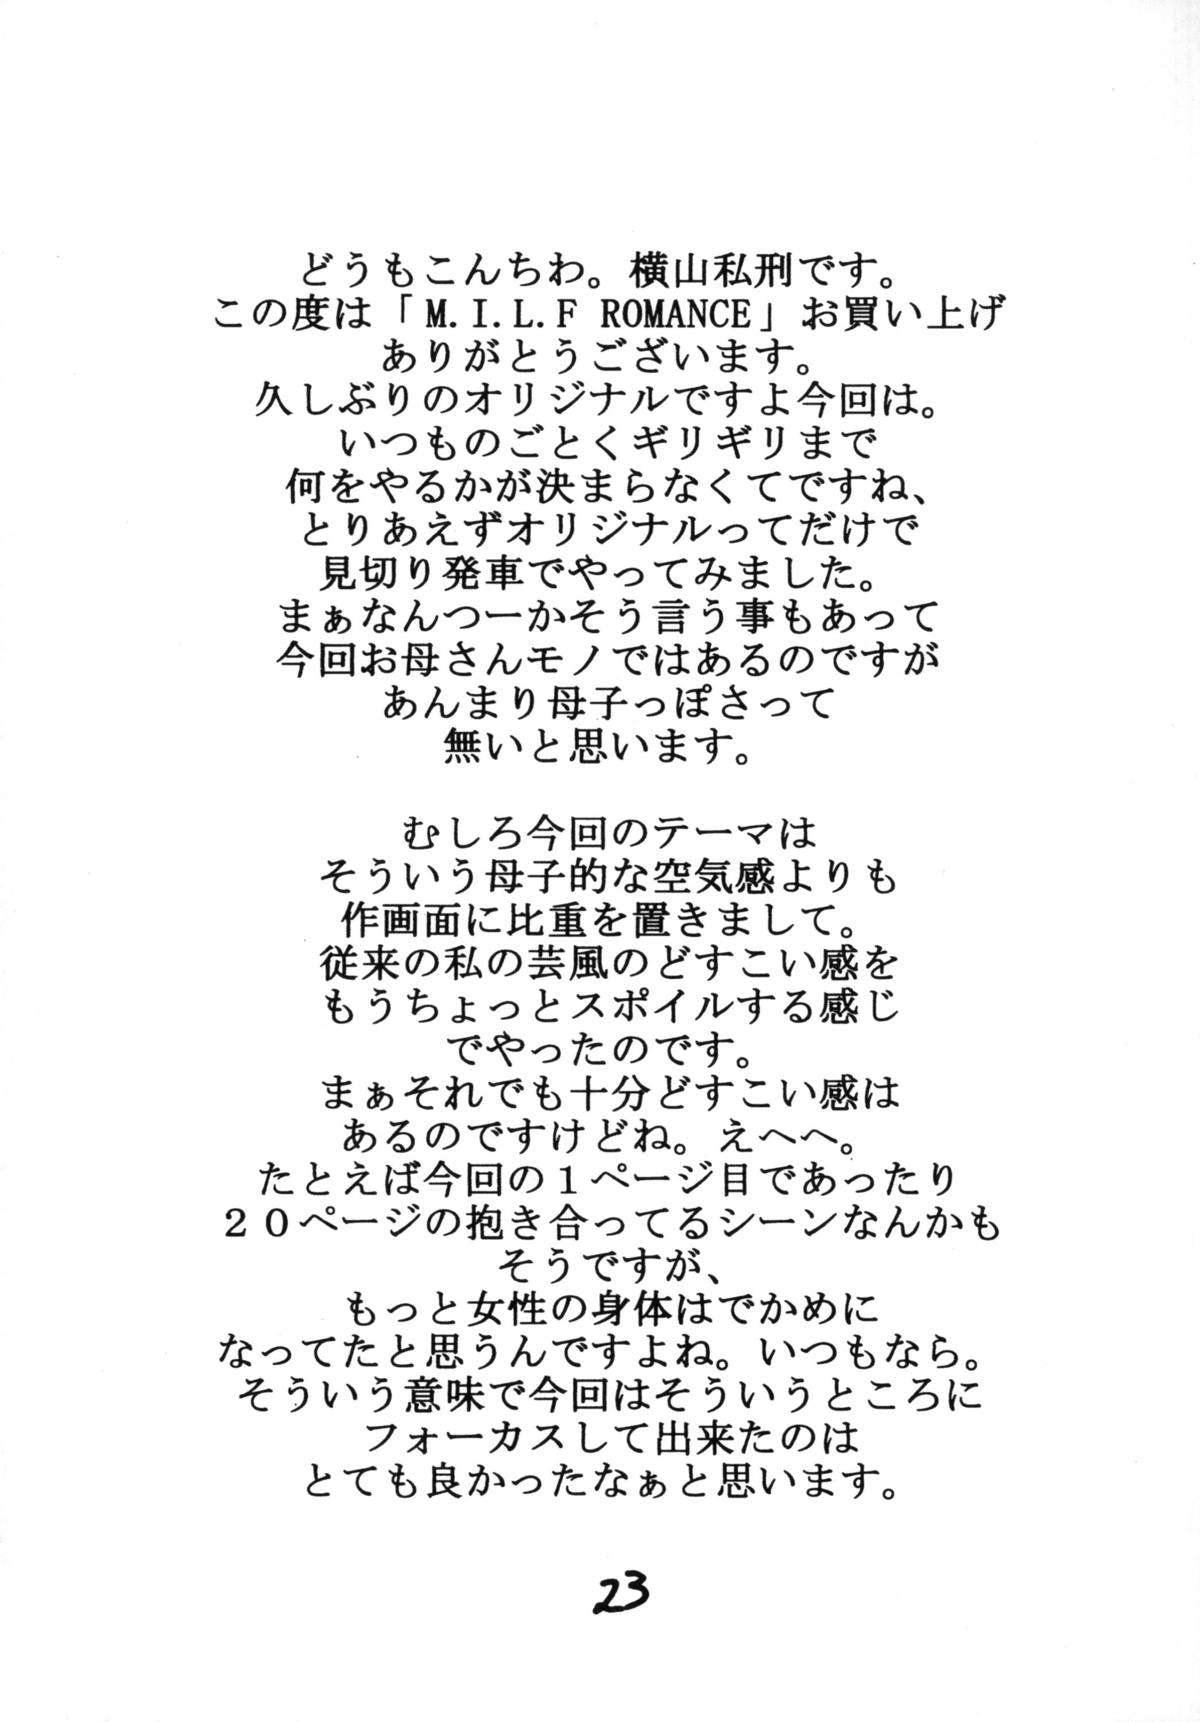 (C79) [SISTER SCREAMING I DIE (横山私刑)] M.I.L.F ROMANCE